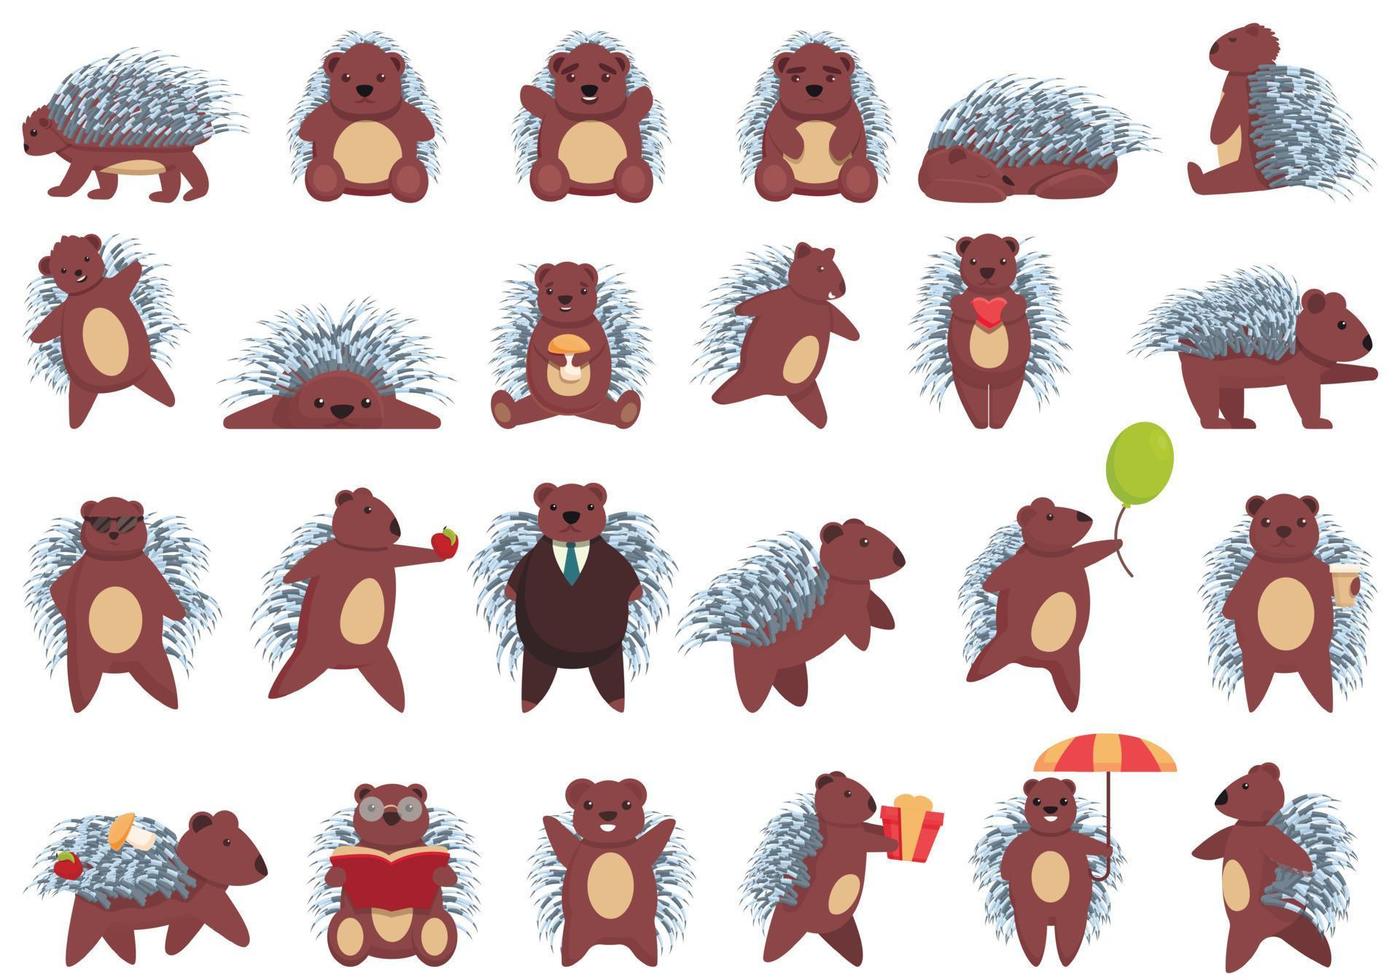 Porcupine icons set, cartoon style vector